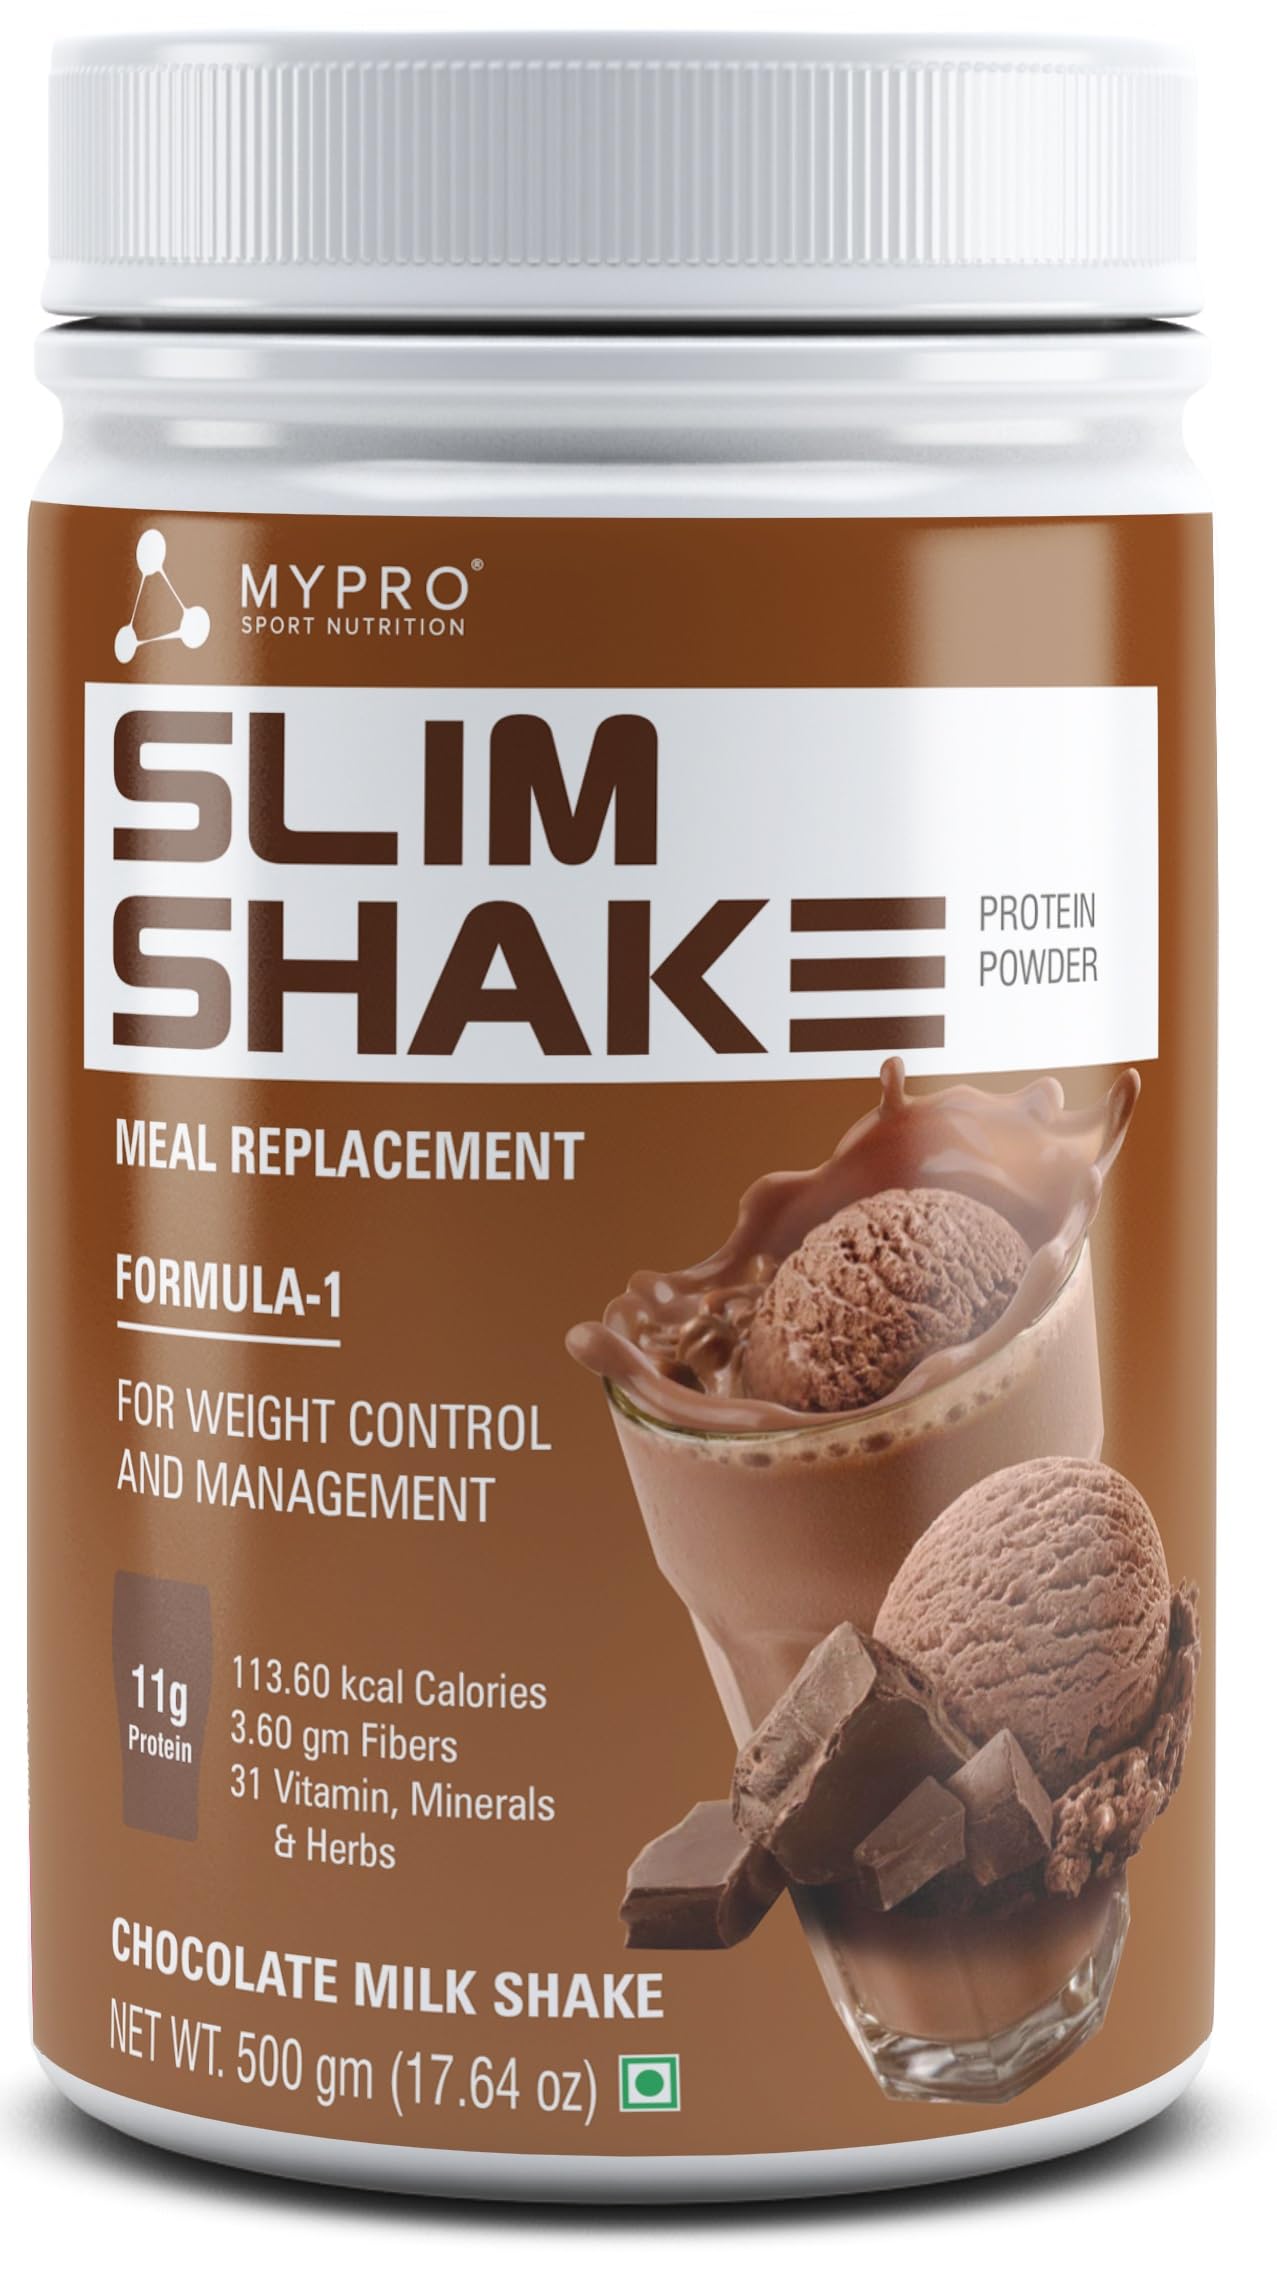 Mypro Sport Nutrition Slim Shake Protein Powder